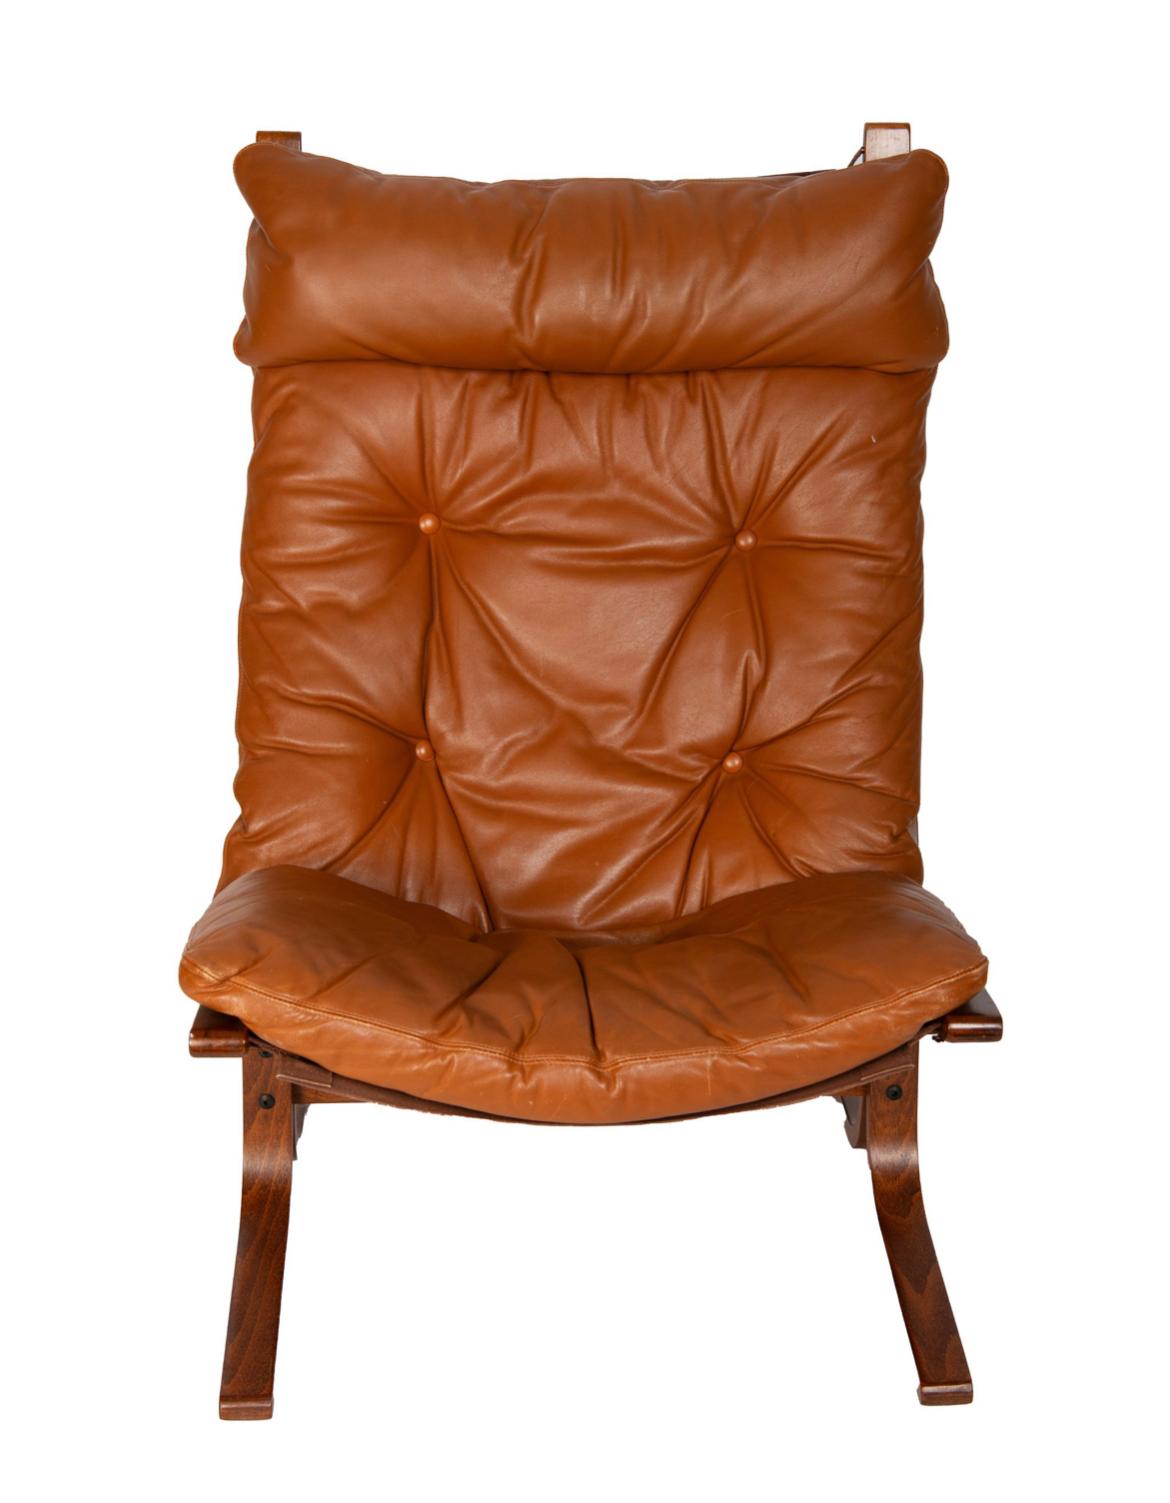 Norwegian Midcentury Scandinavian Modern Leather Siesta Lounge Chair & Ottoman by Westnofa